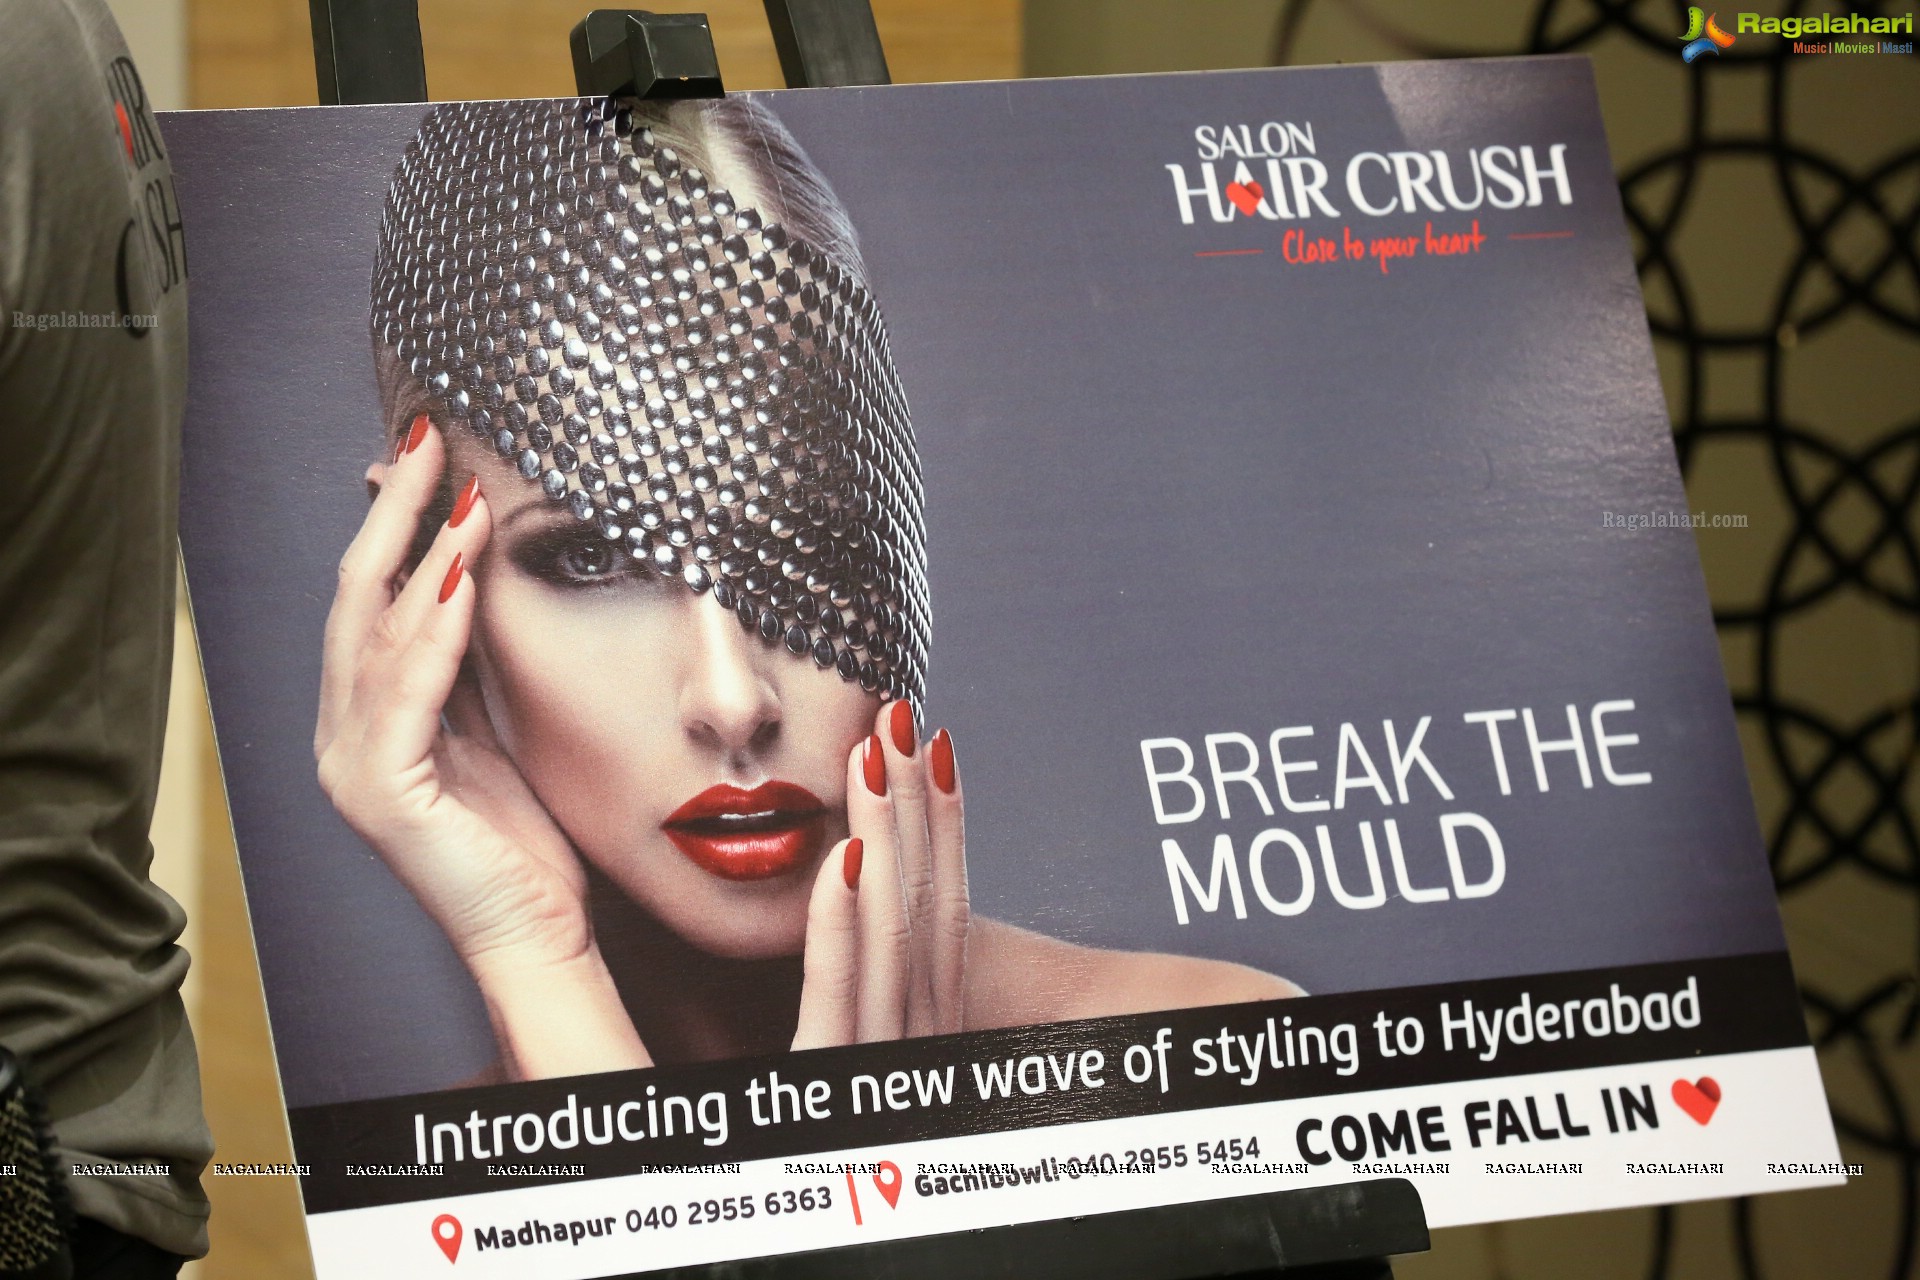 Salon Hair Crush Launch Party With a Fashion Show at Hotel Daspalla